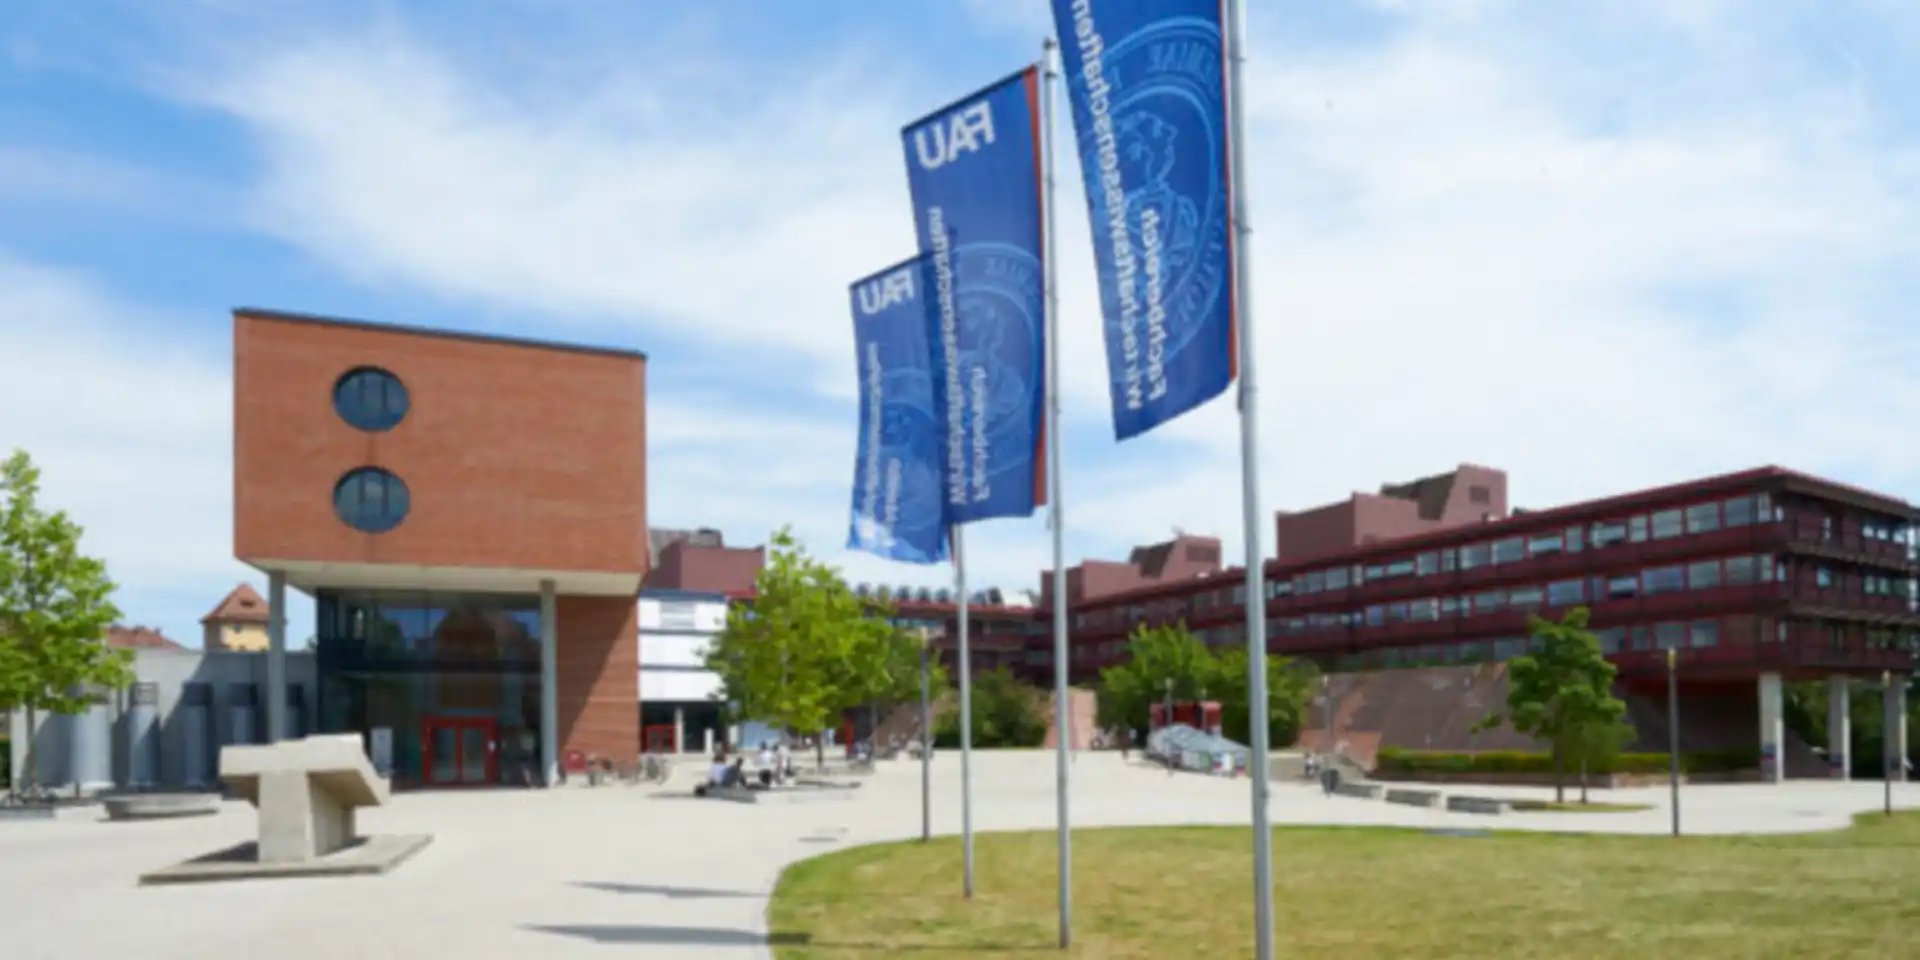 FAU - Friedrich-Alexander University Erlangen-Nürnberg